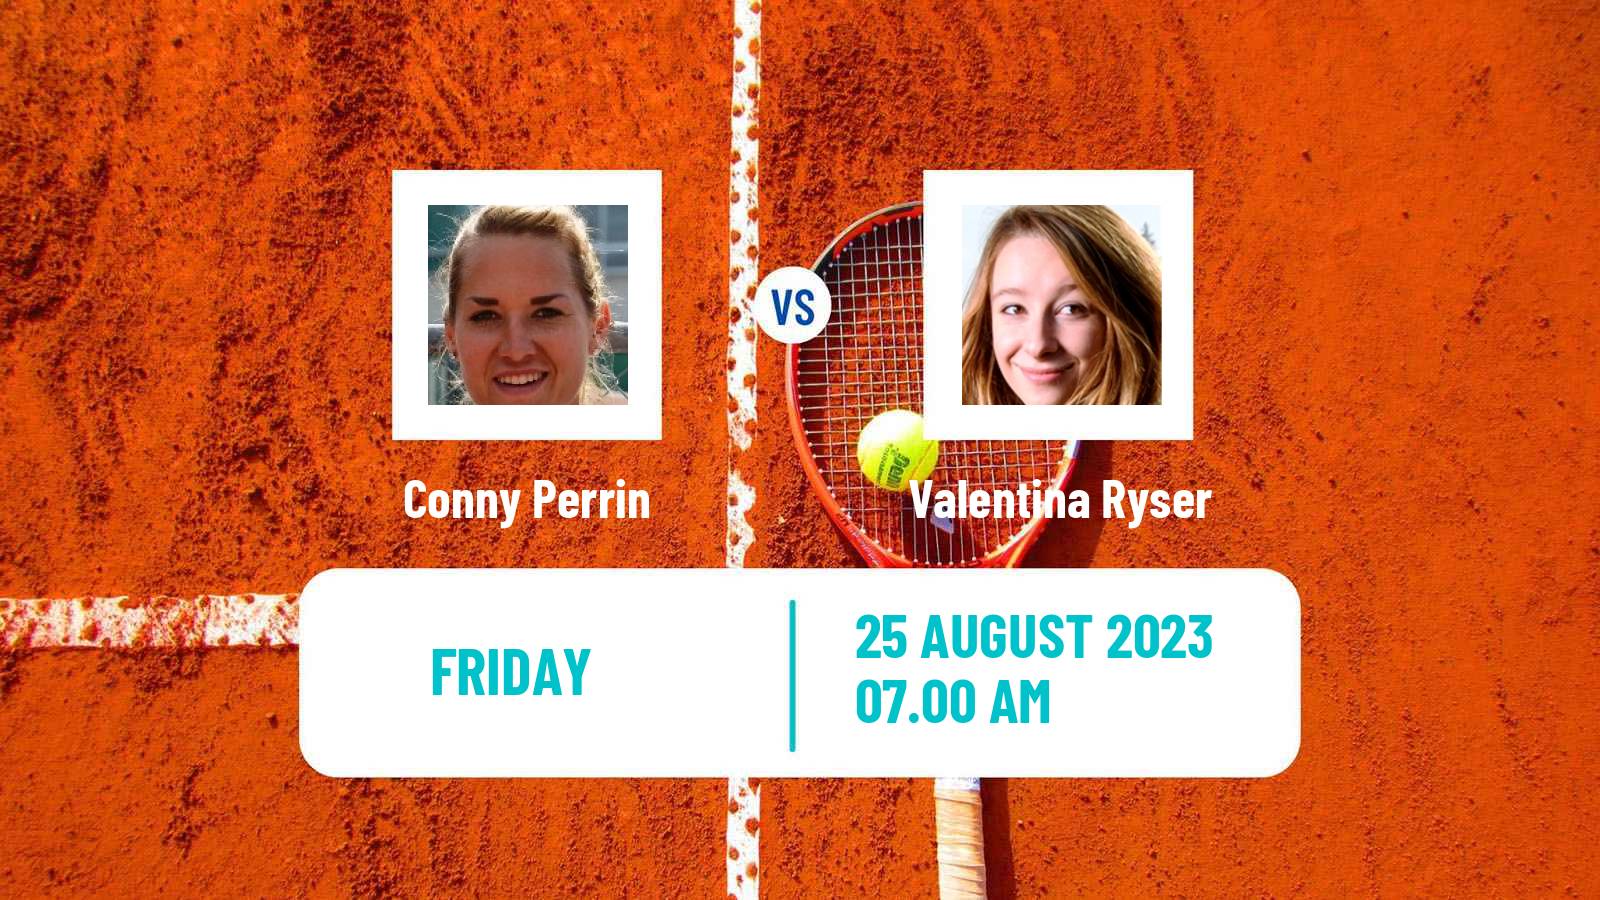 Tennis ITF W25 Verbier Women Conny Perrin - Valentina Ryser